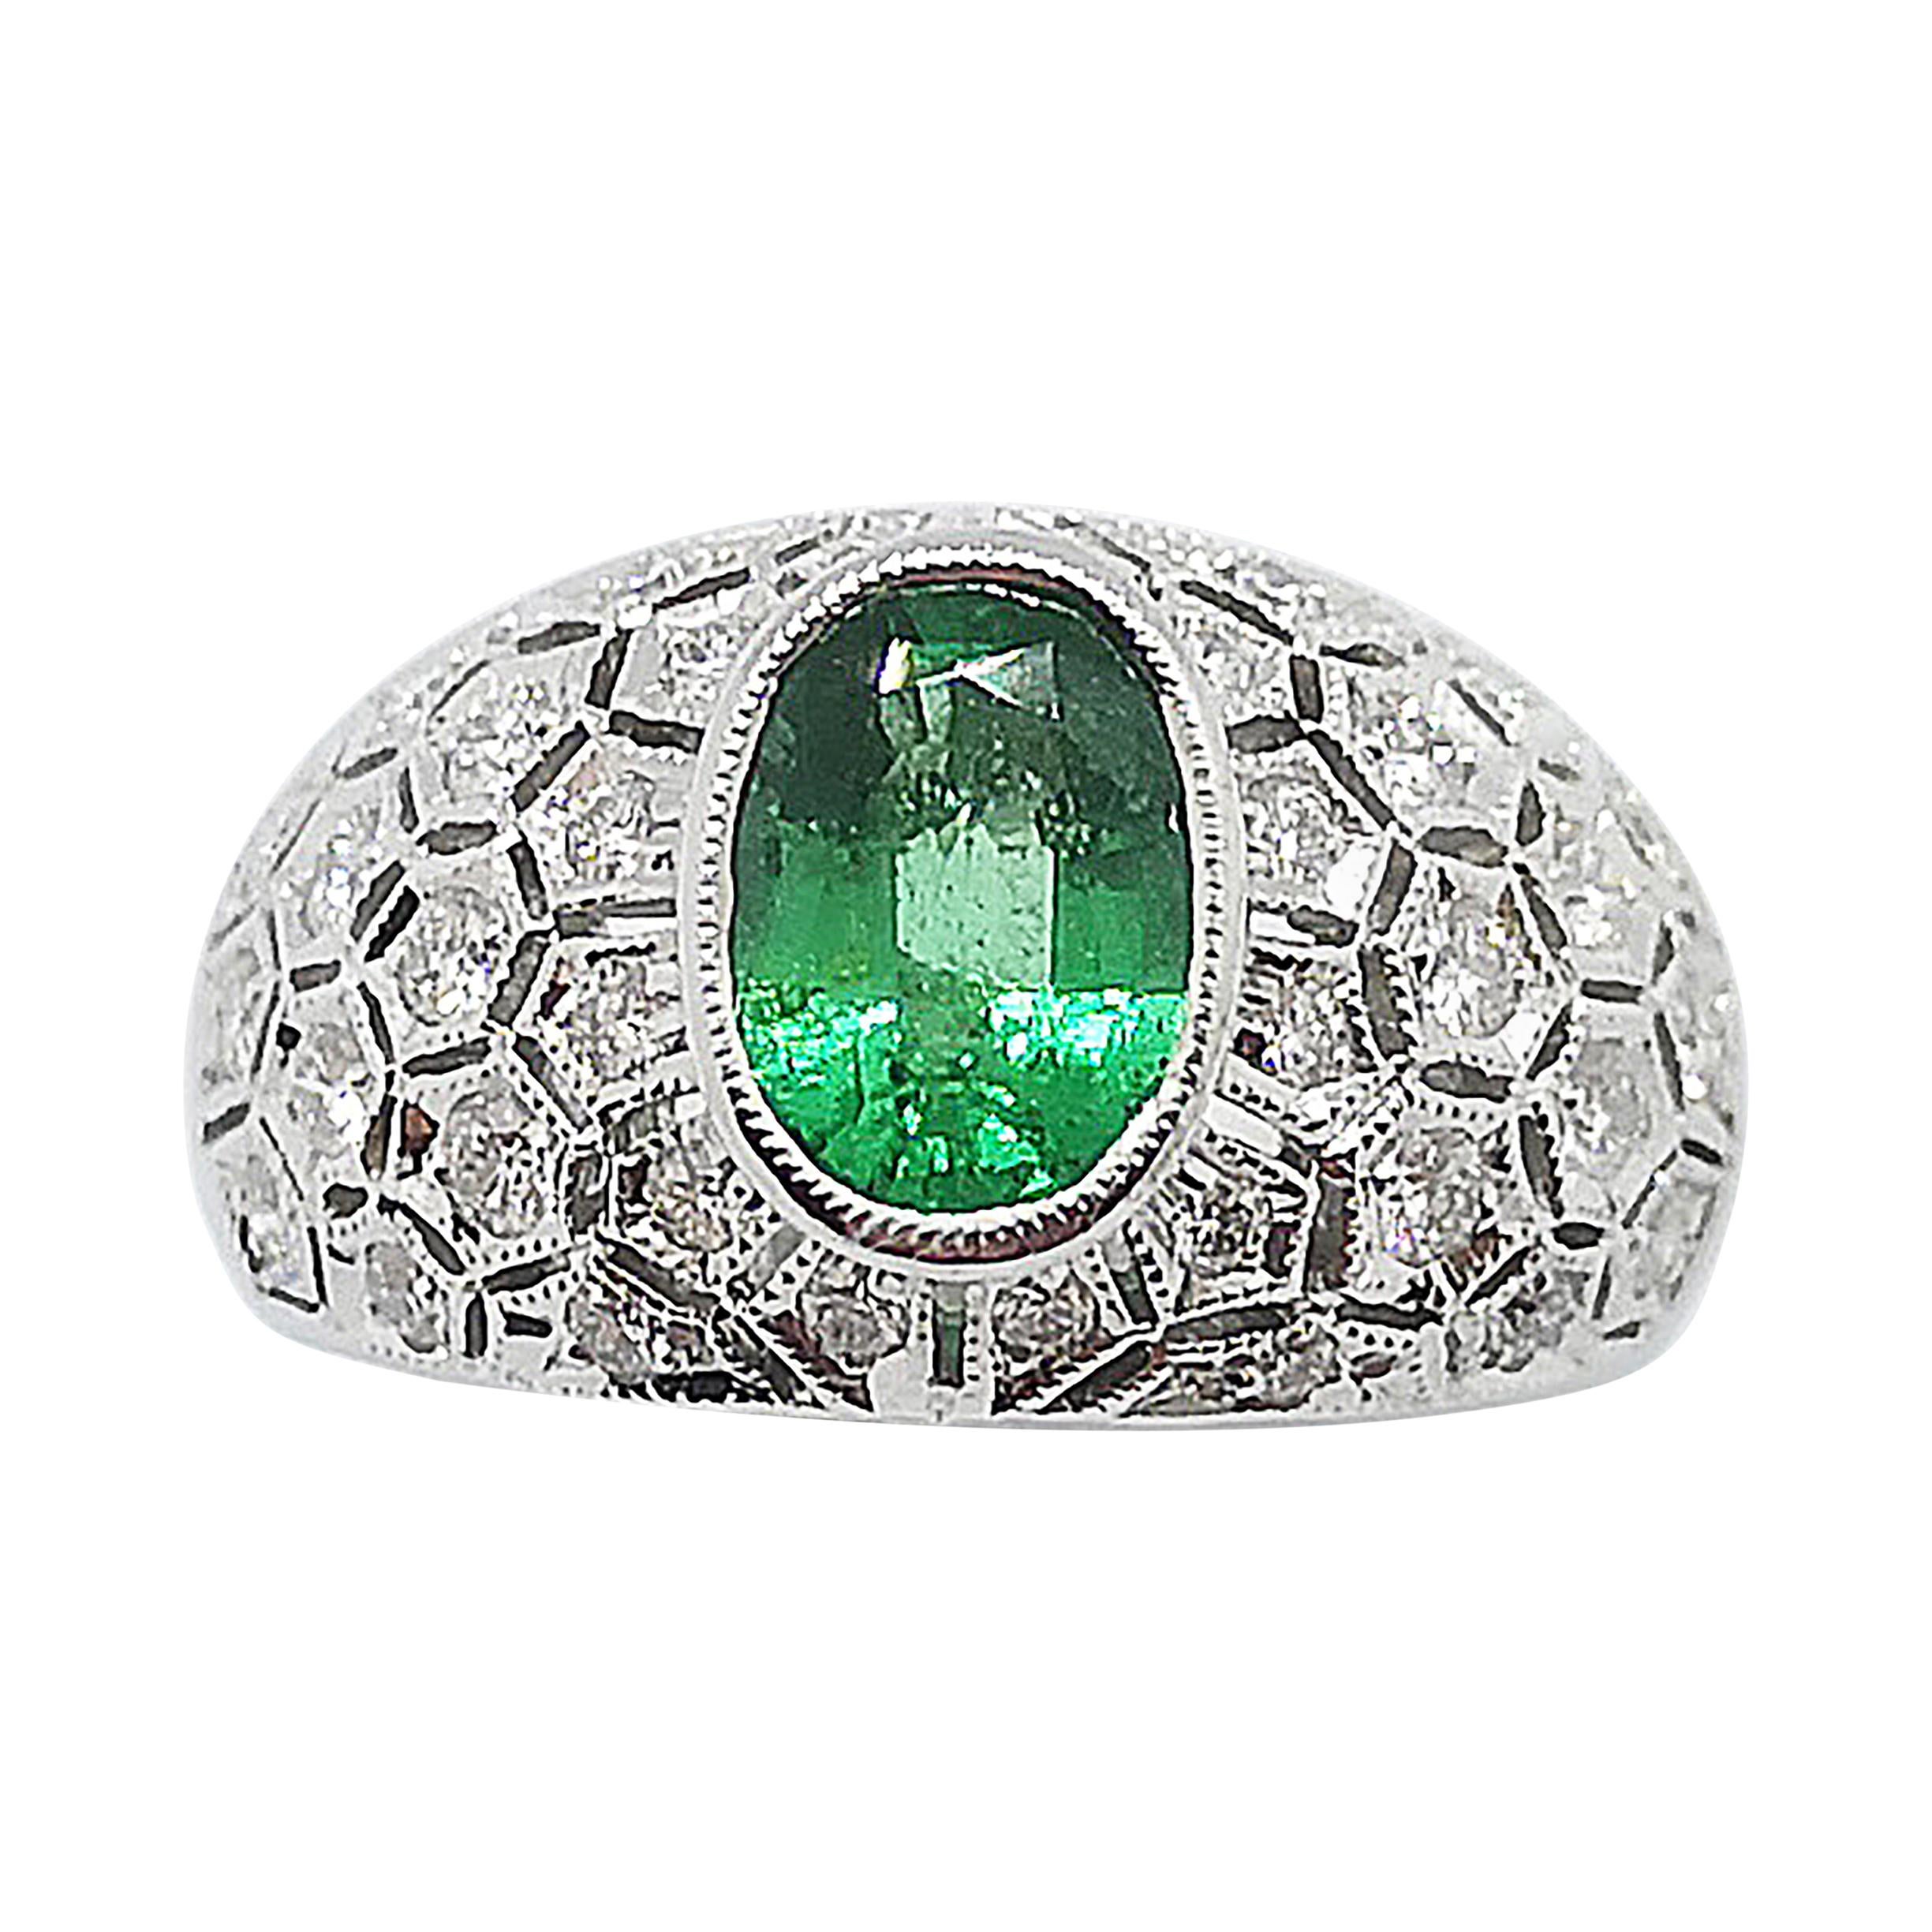 Emerald with Diamond Ring Set in 18 Karat White Gold Settings